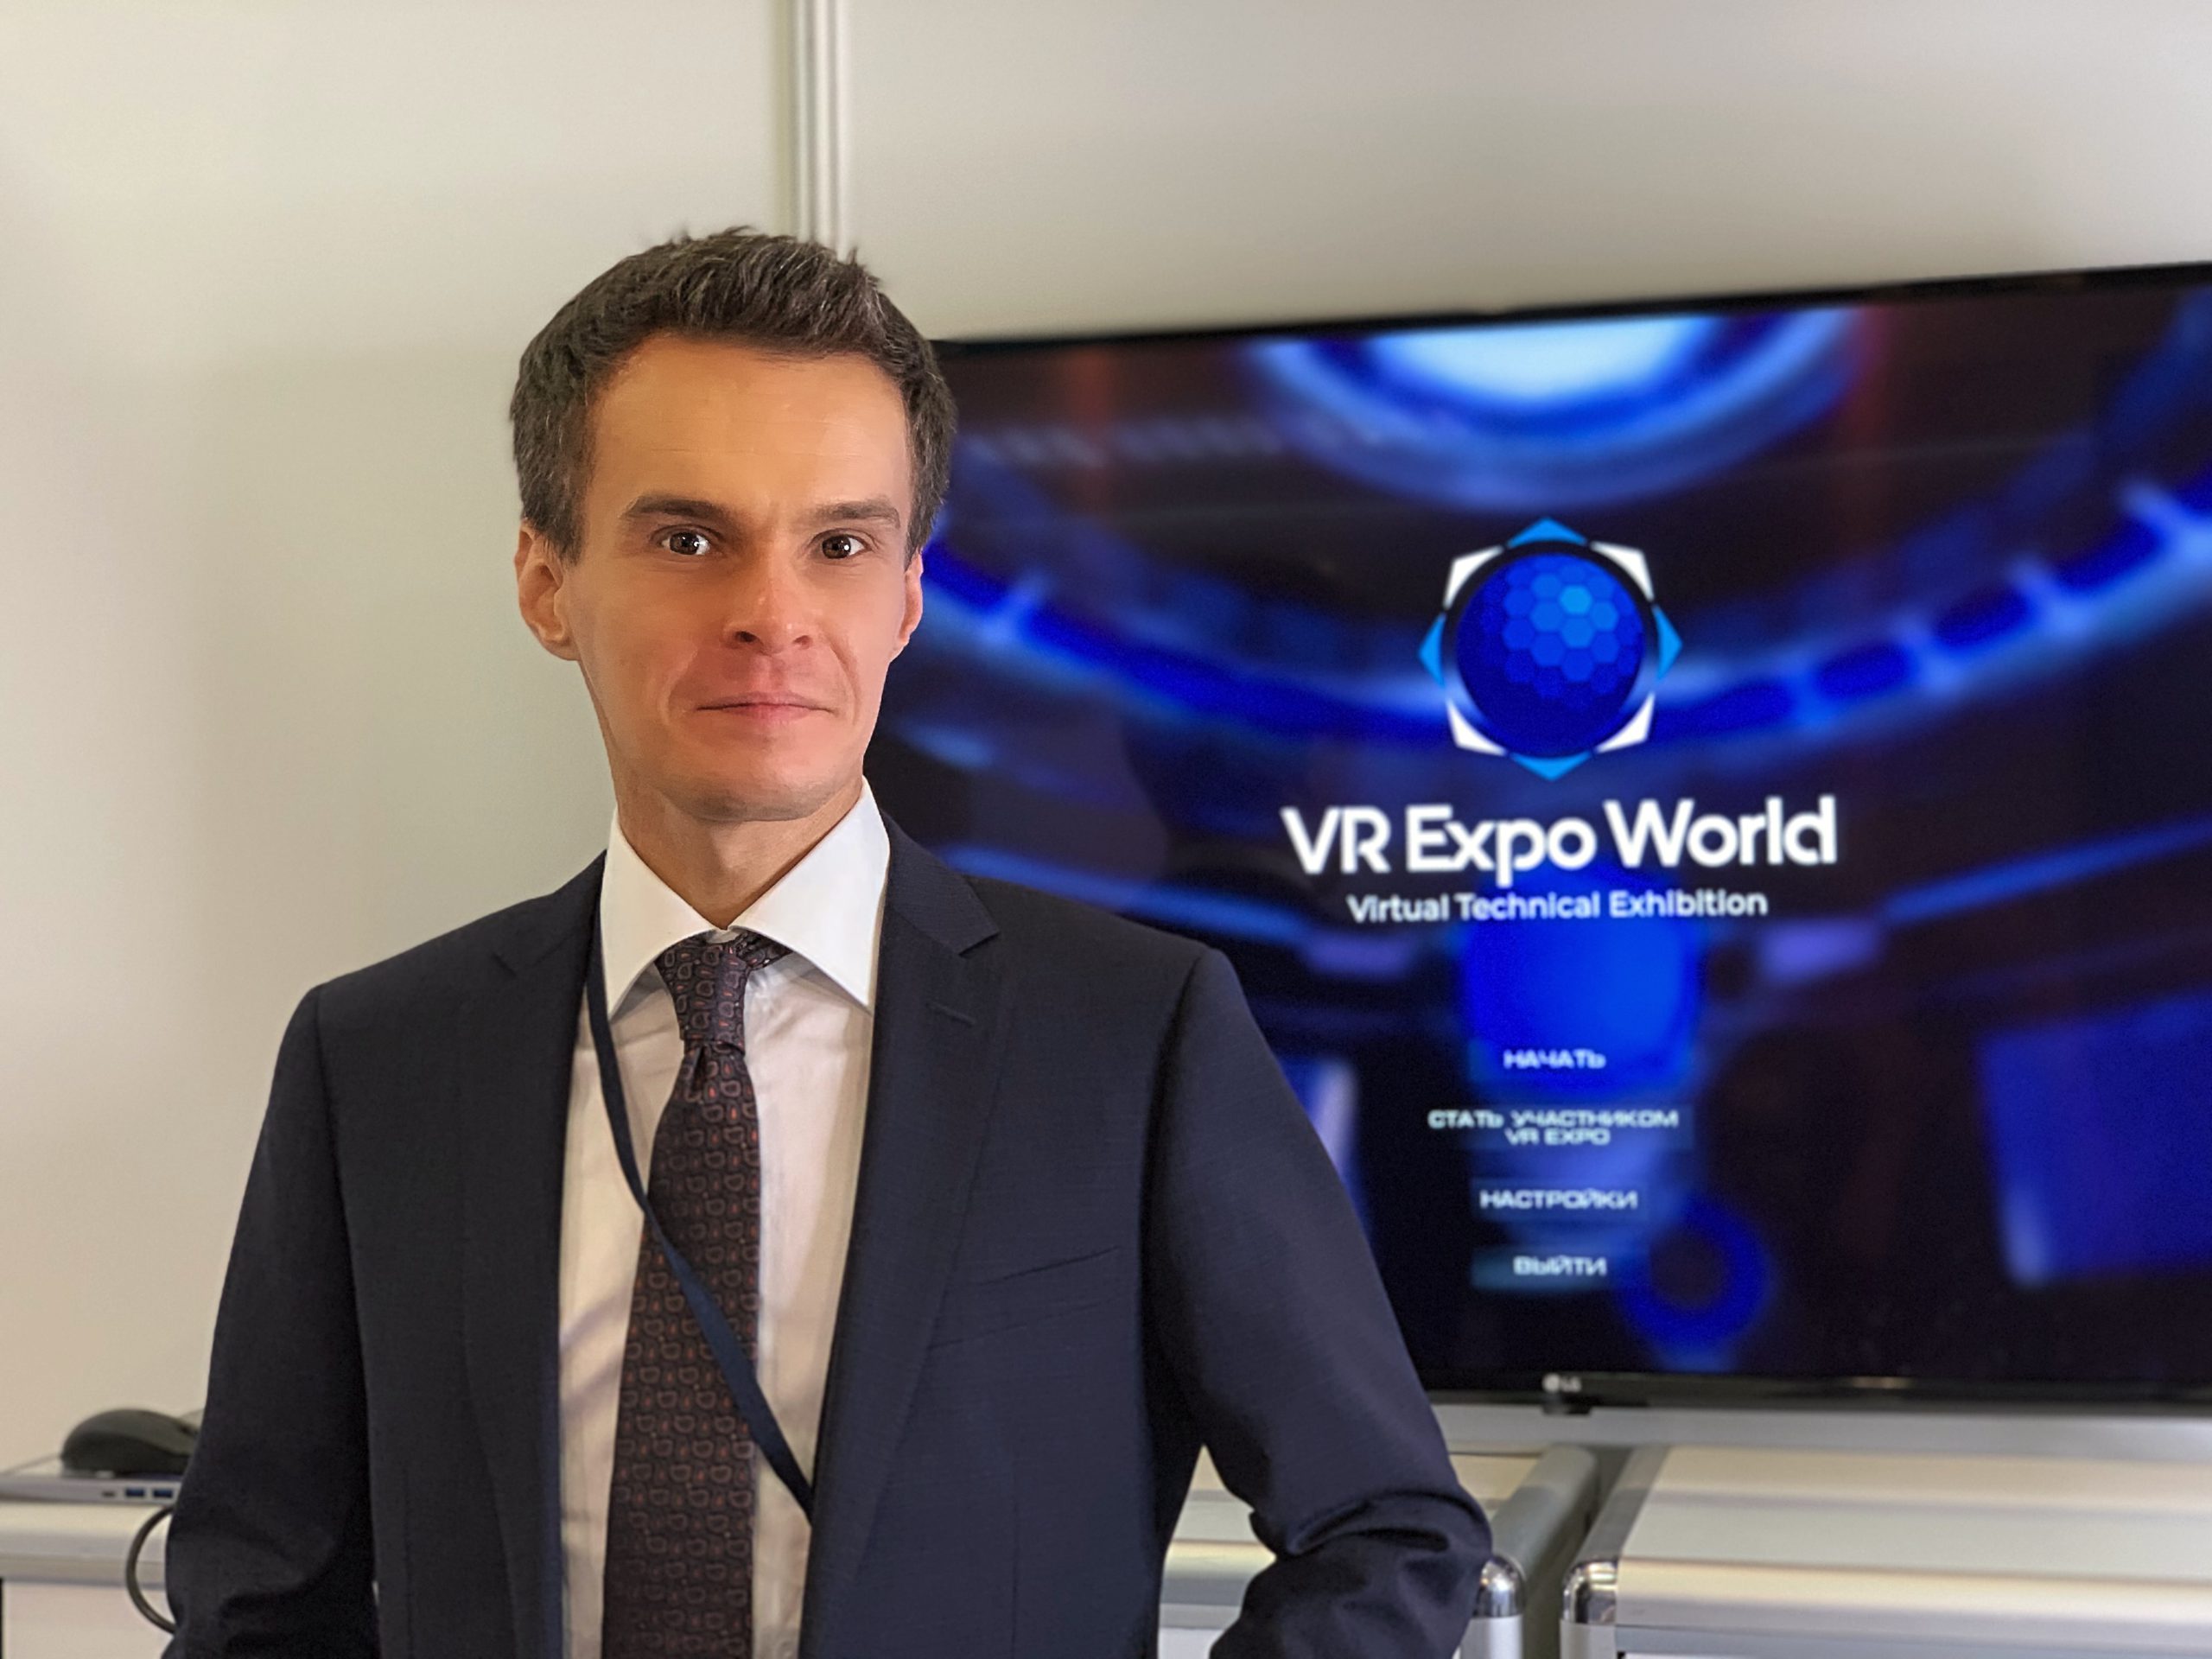 CEO VR Expo World